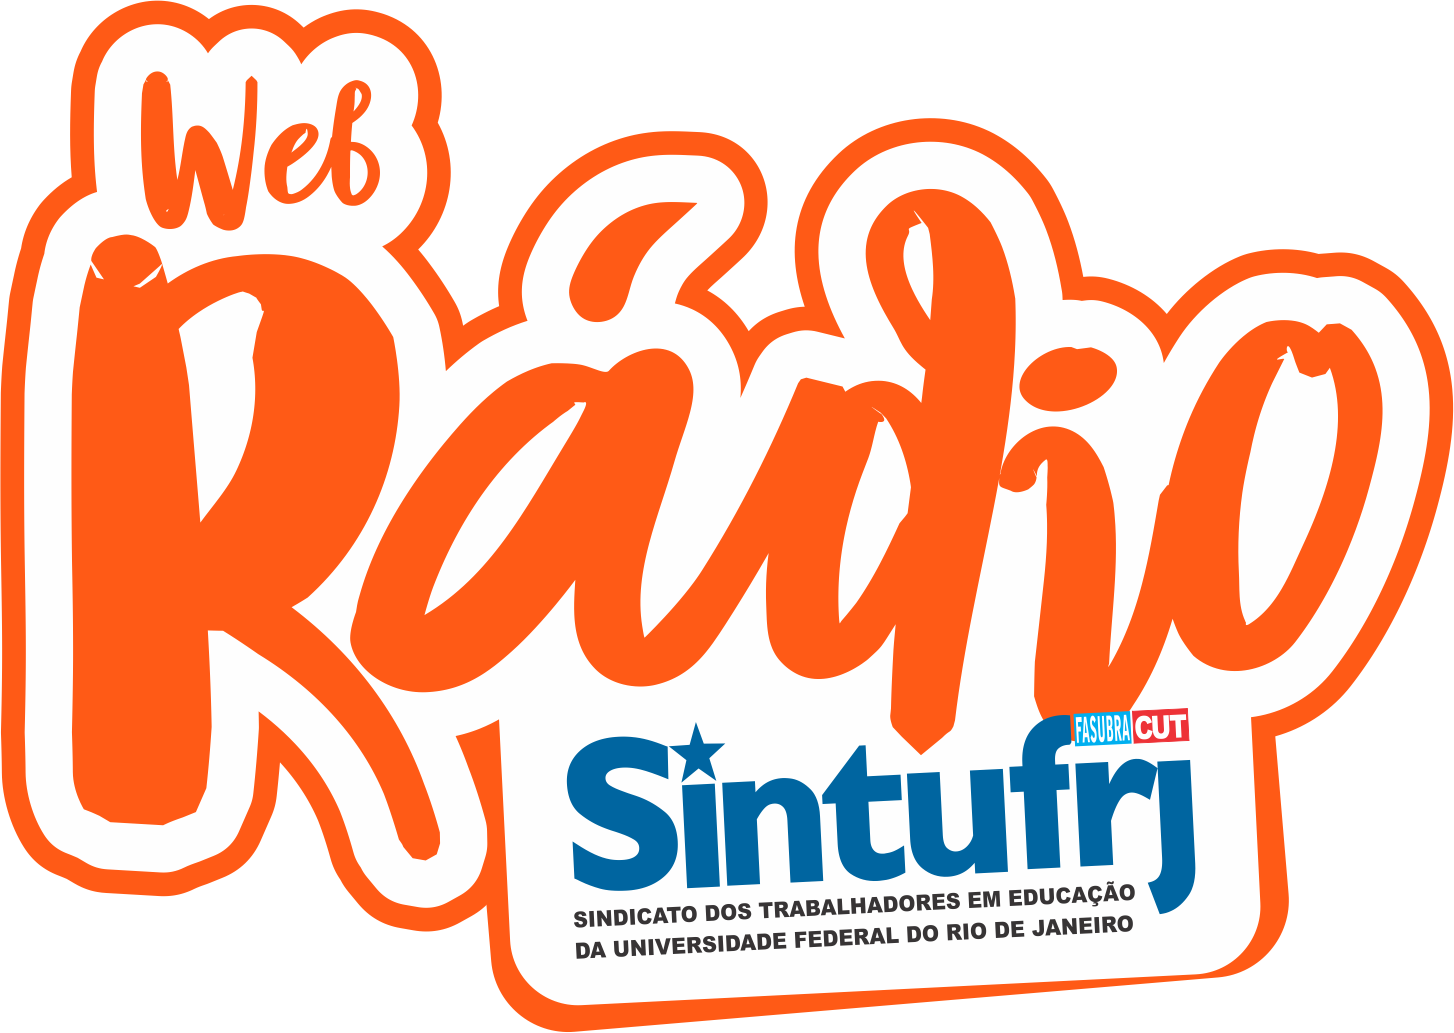 Logomarca Web Rádio Sintufrj